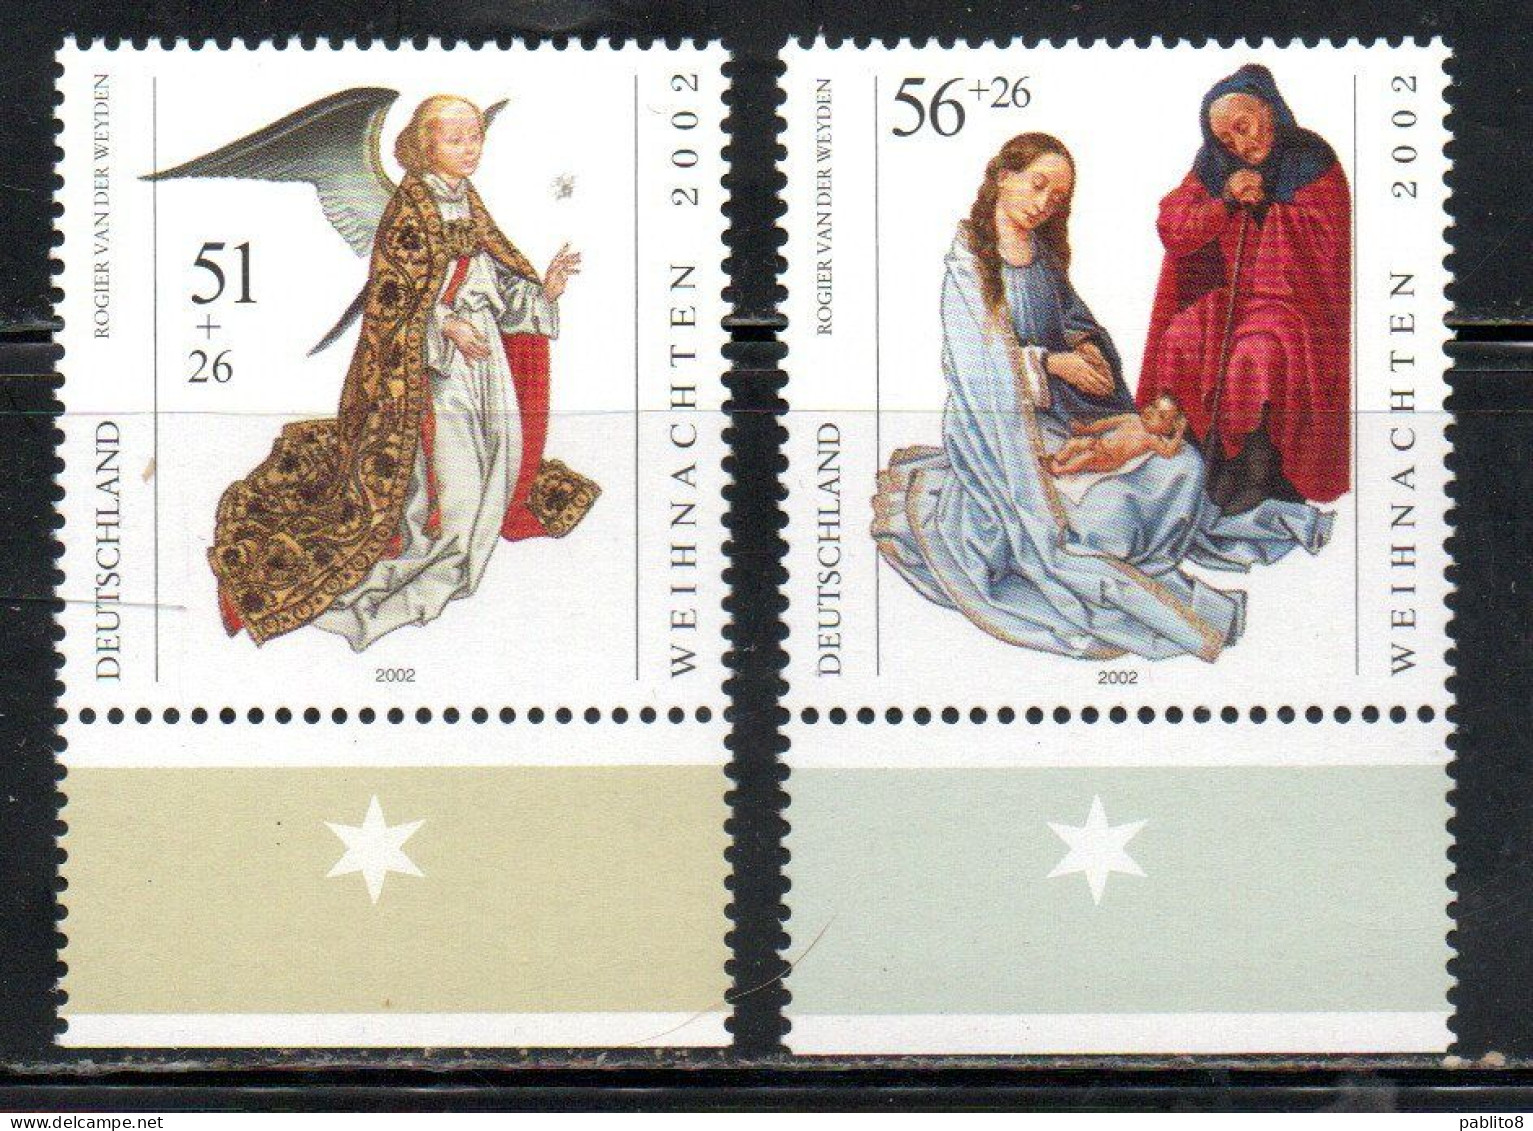 GERMANY GERMANIA ALLEMAGNE 2002 CHRISTMAS WEIHNACHTEN NATALE NOEL NAVIDAD COMPLETE SET SERIE COMPLETA MNH - Unused Stamps